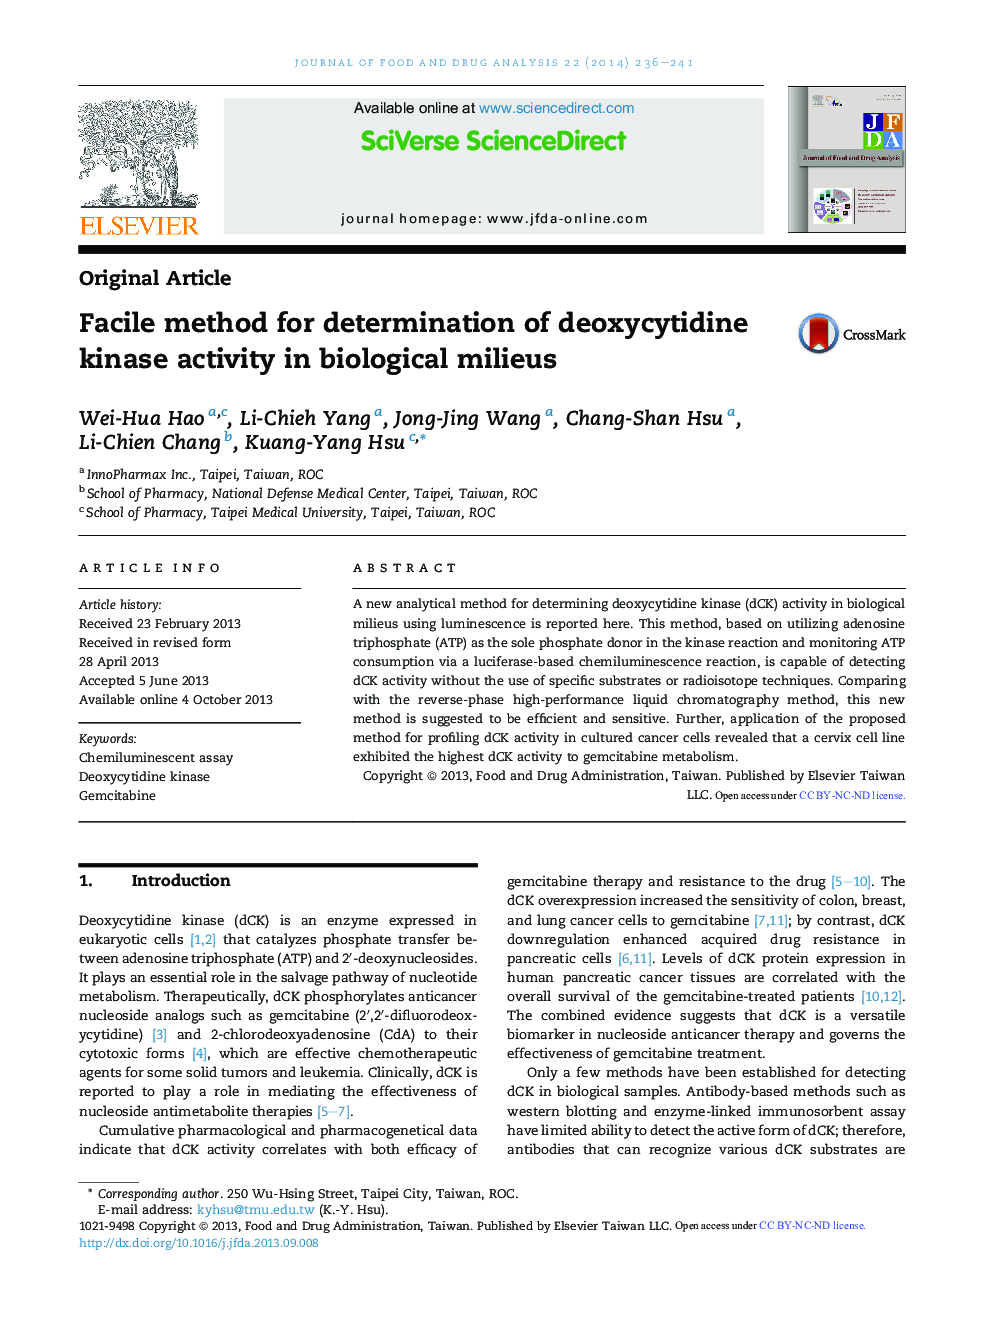 Facile method for determination of deoxycytidine kinase activity in biological milieus